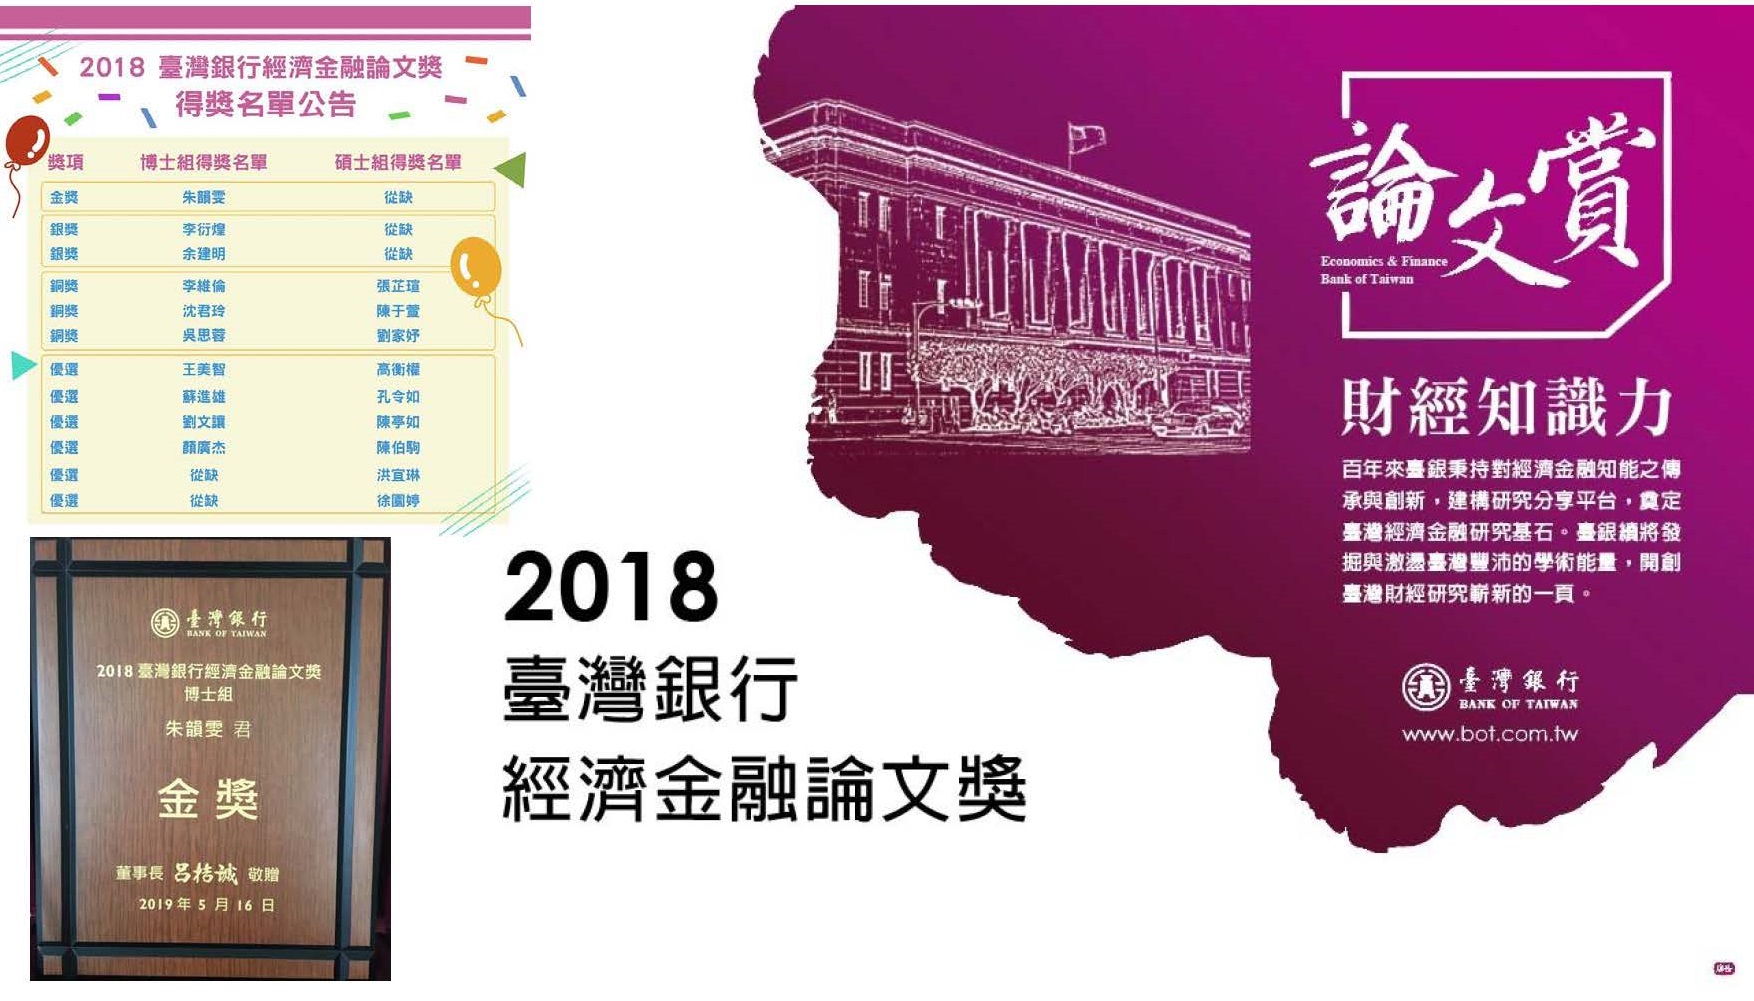 2018 Awardee of Economic and Financial Paper Award, Bank of Taiwan